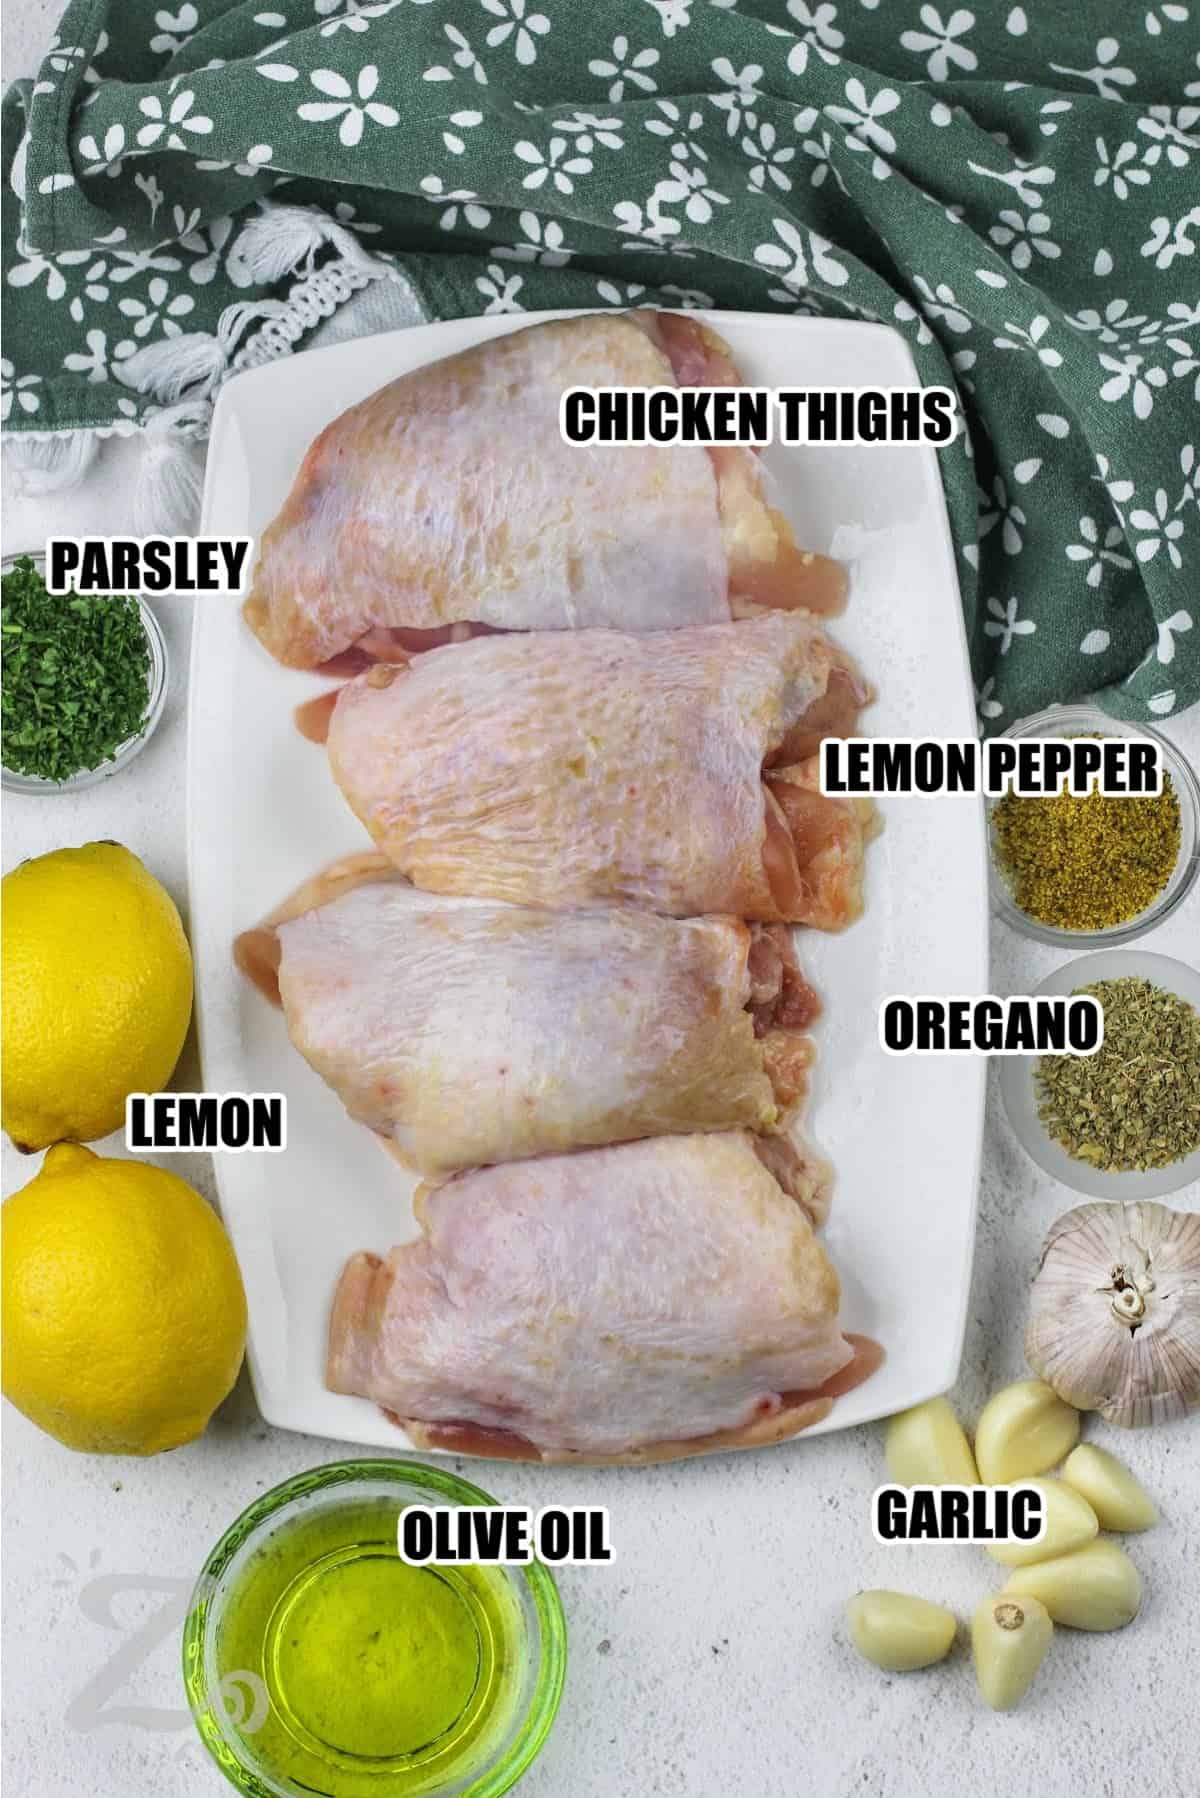 ingredients to make Lemon Pepper Chicken Thighs labeled: chicken thighs, lemon pepper, oregano, parsley, lemon, garlic, and olive oil